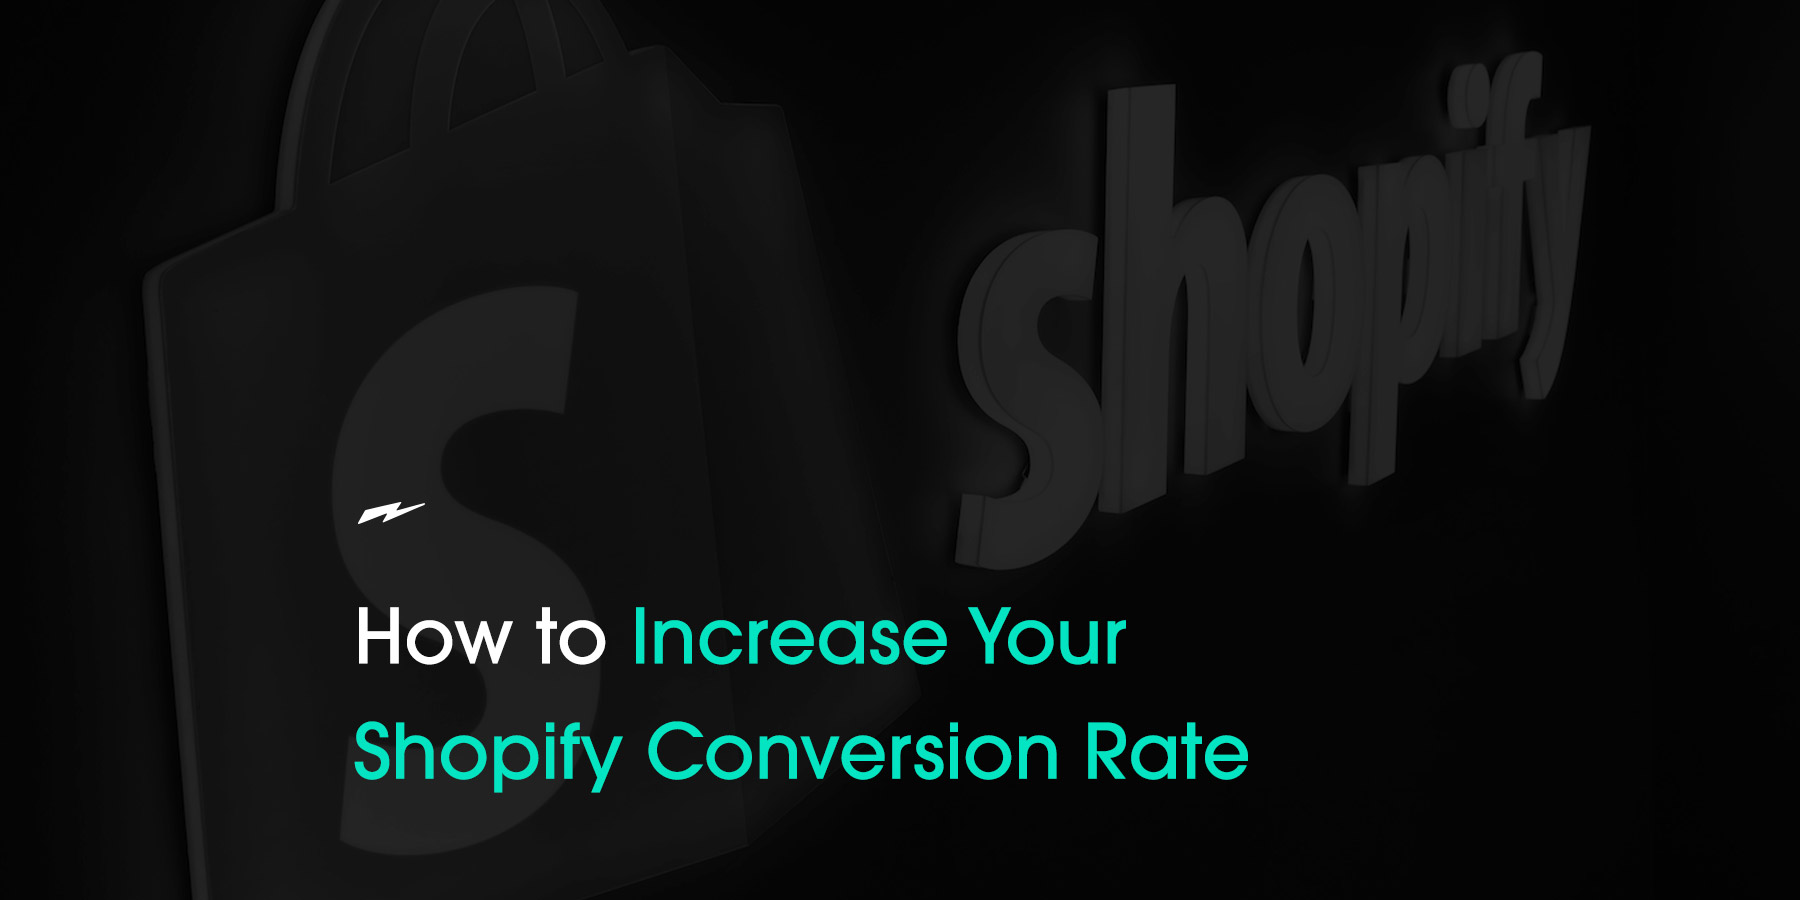 Shopify conversions